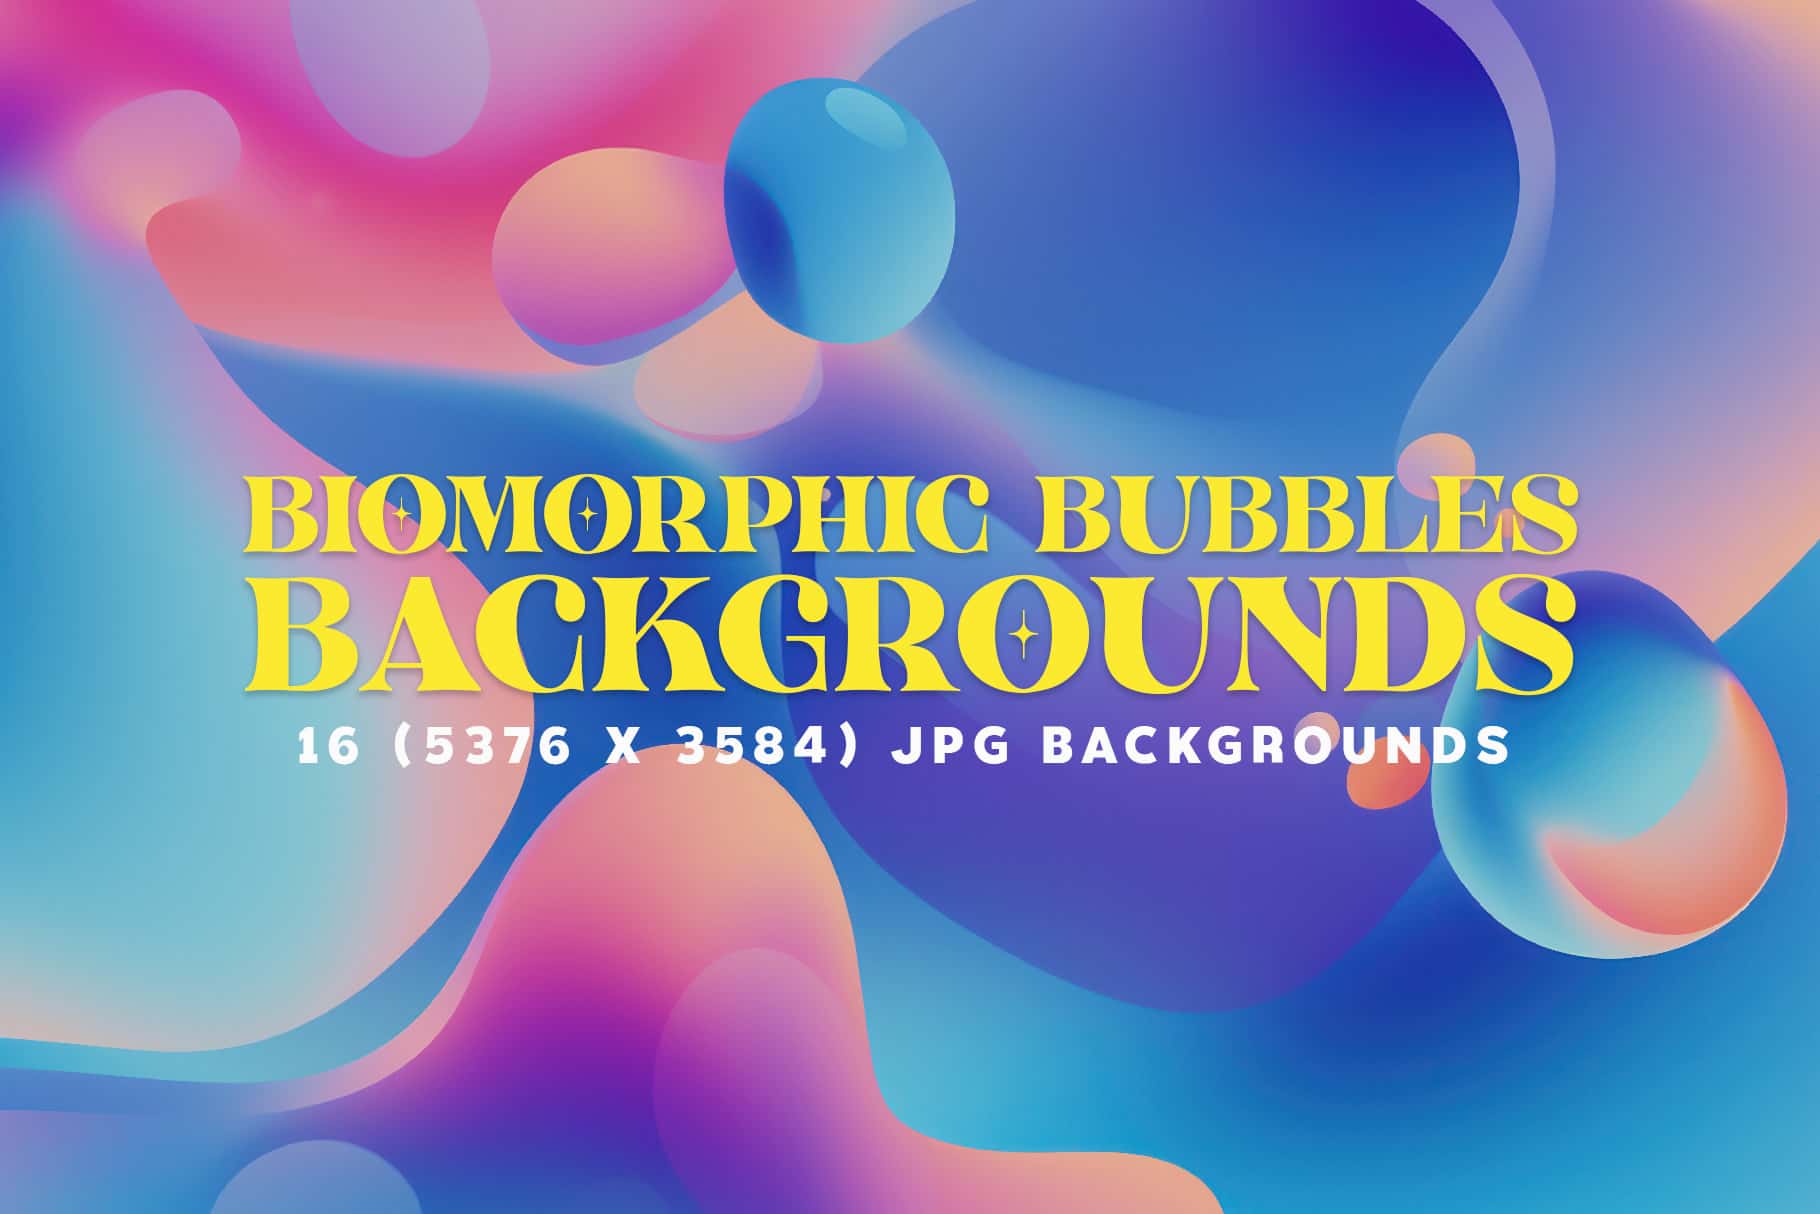 Biomorphic Bubbles Backgrounds